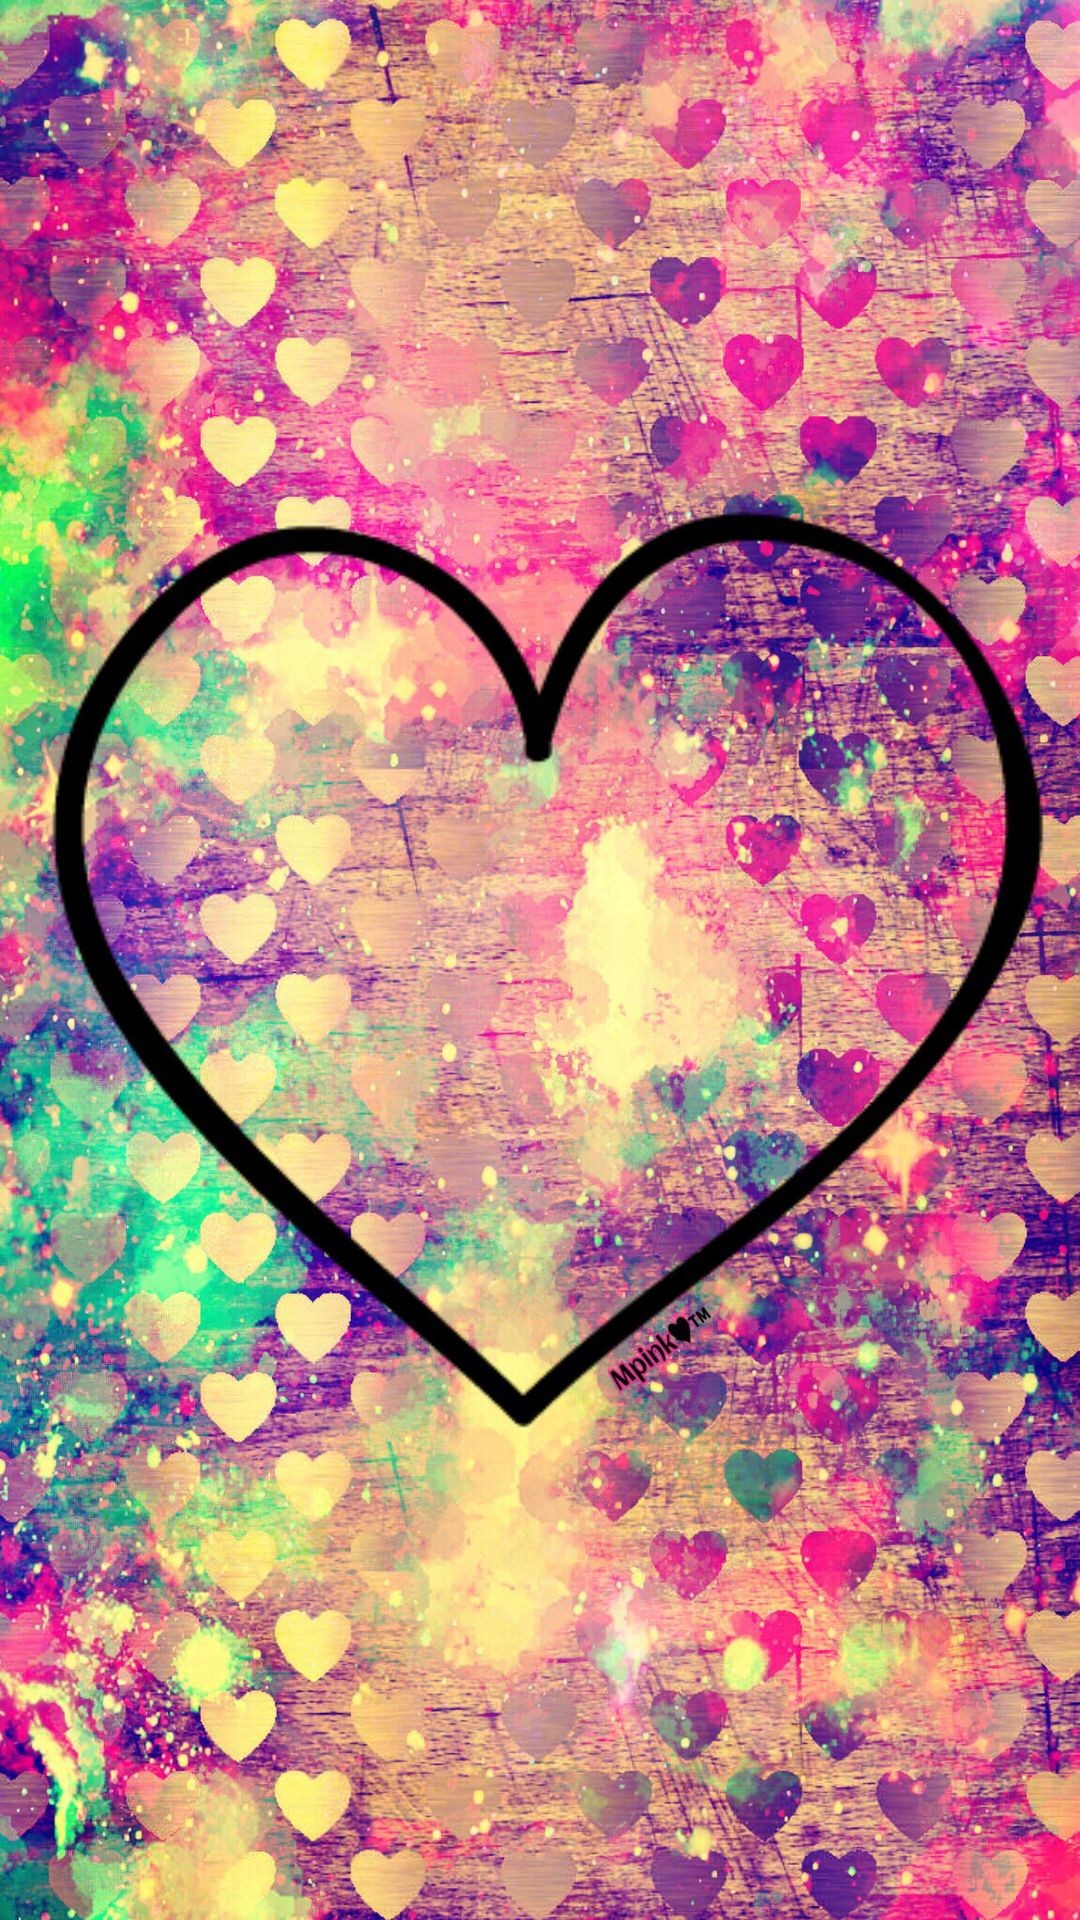 1080x1920 Vintage Hearts Galaxy Wallpaper #androidwallpaper #iphonewallpaper # wallpaper #galaxy #sparkle #glitter #lockscreen #pretty #pink #cute #love # girly #hearts ...